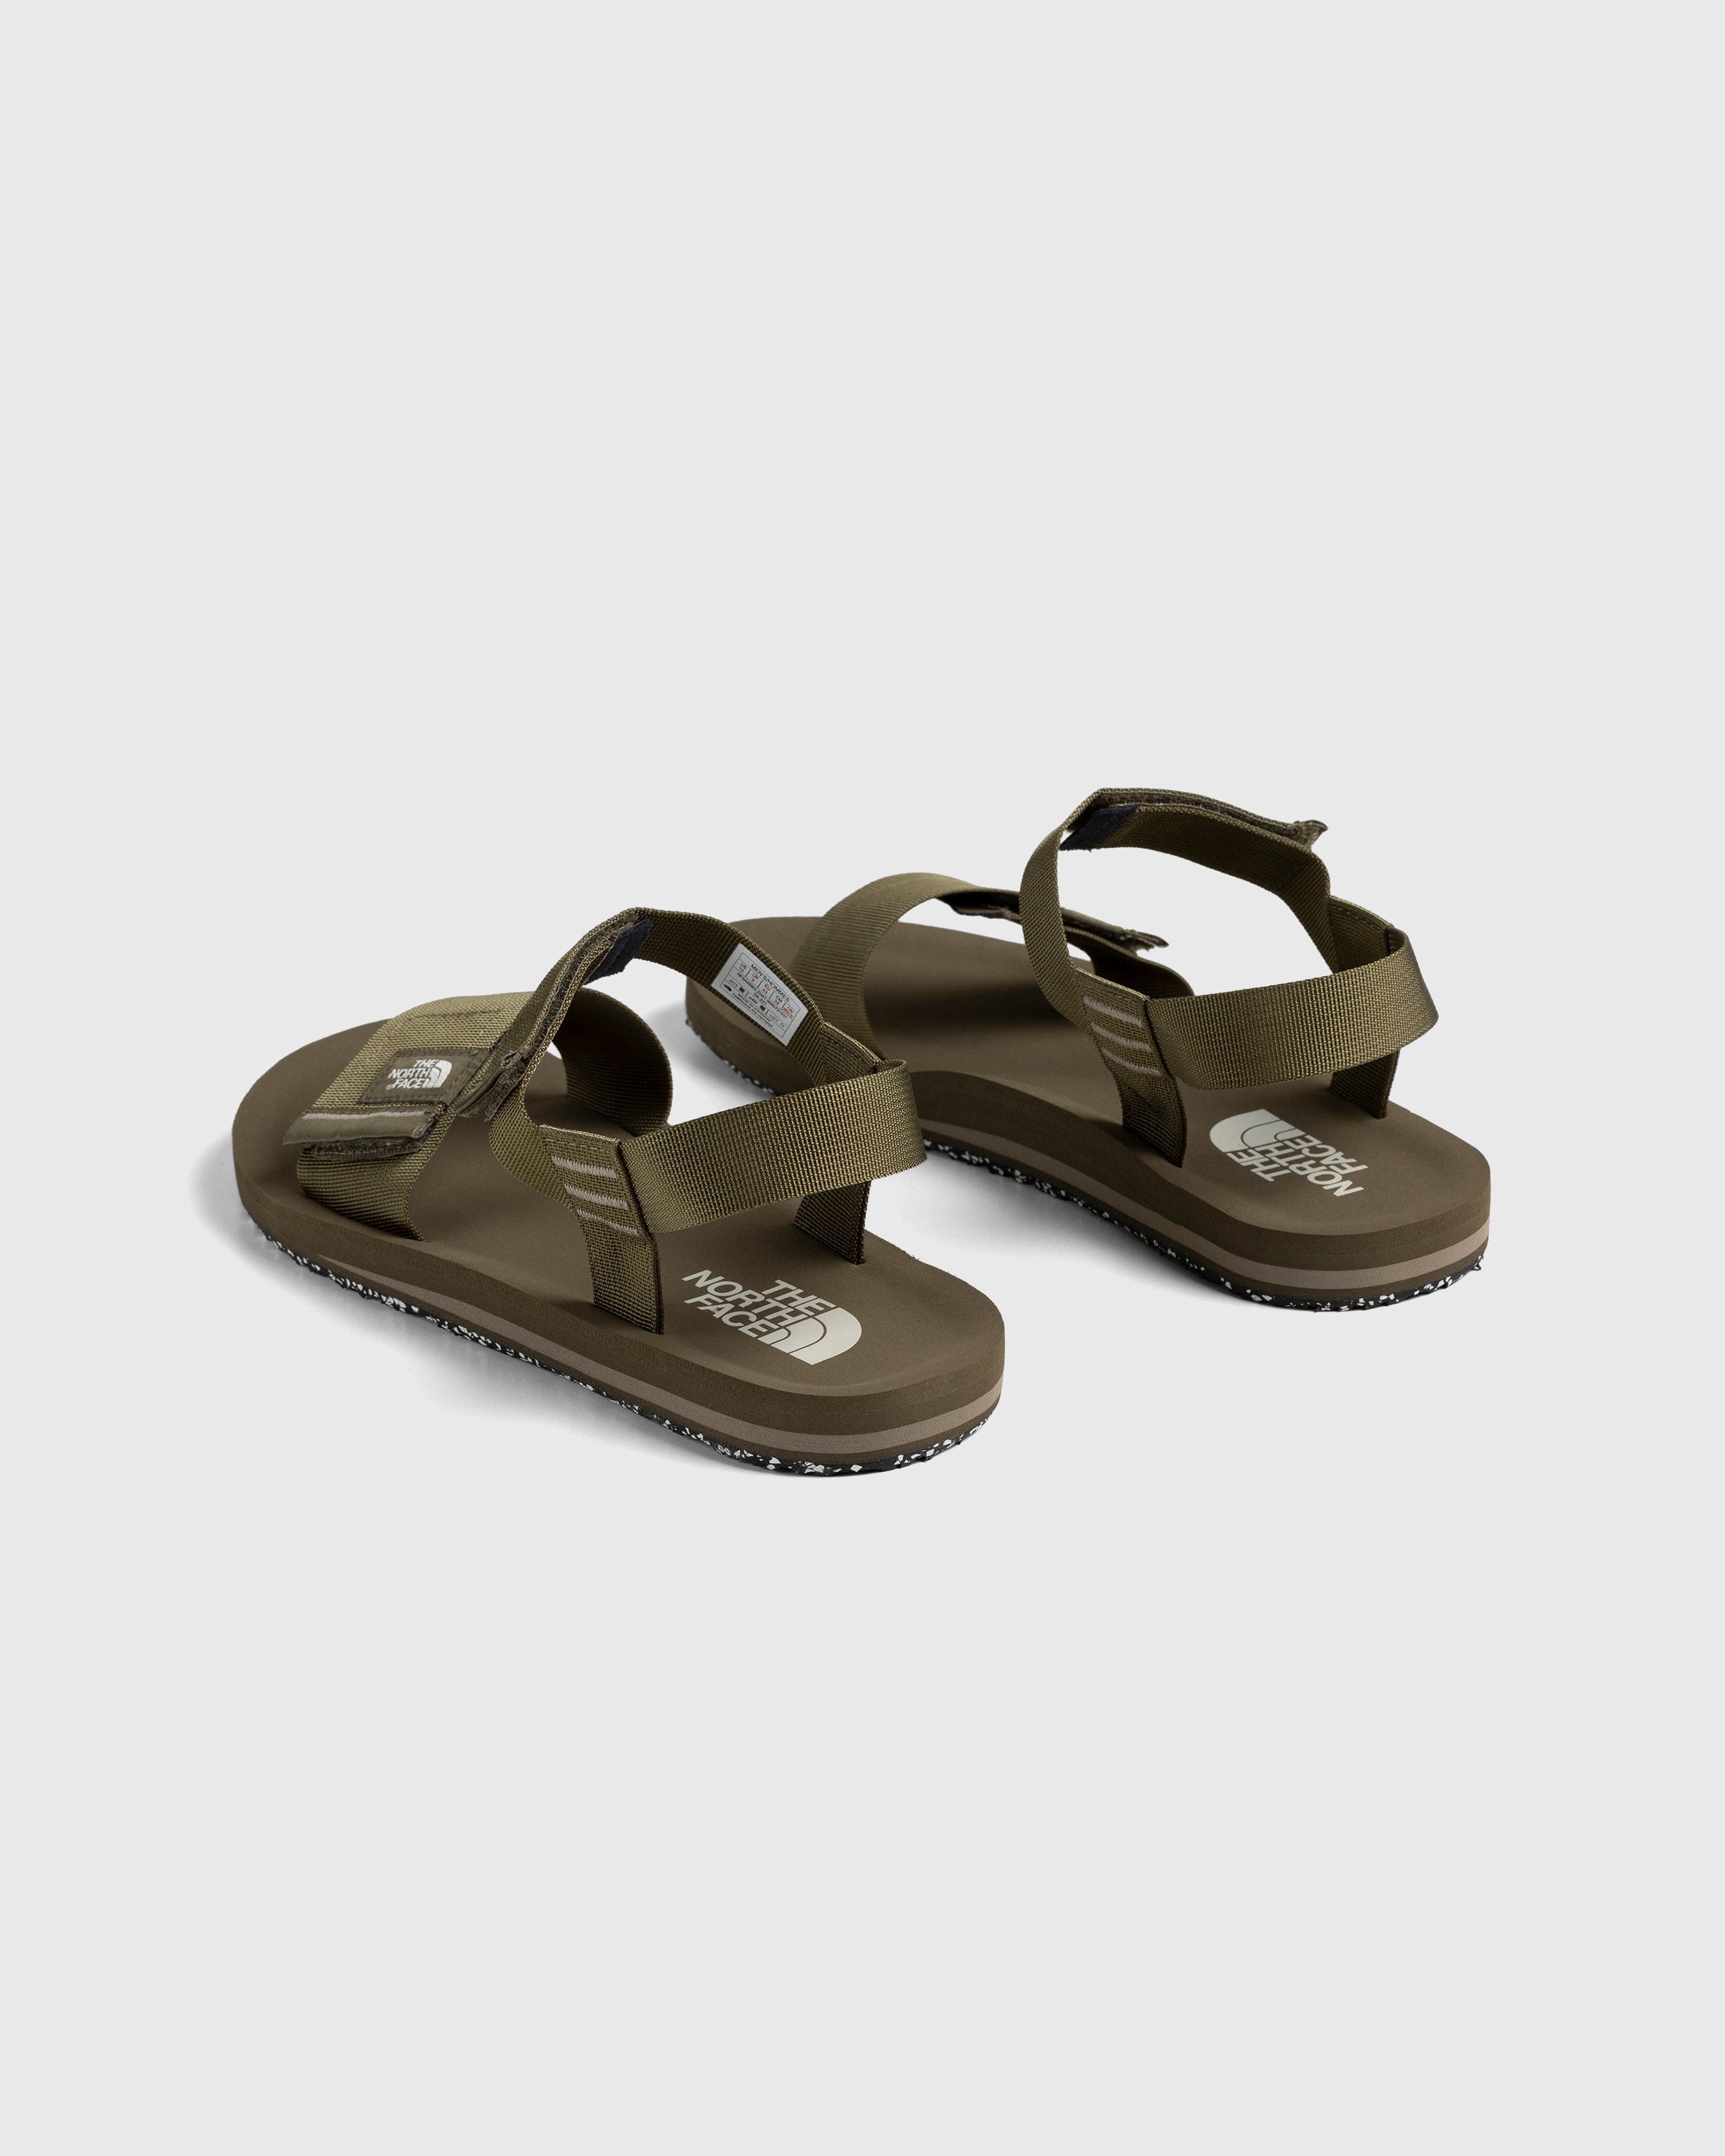 The North Face - Skeena Sport Sandal Militaryolive/Mineralgrey - Footwear - Green - Image 4